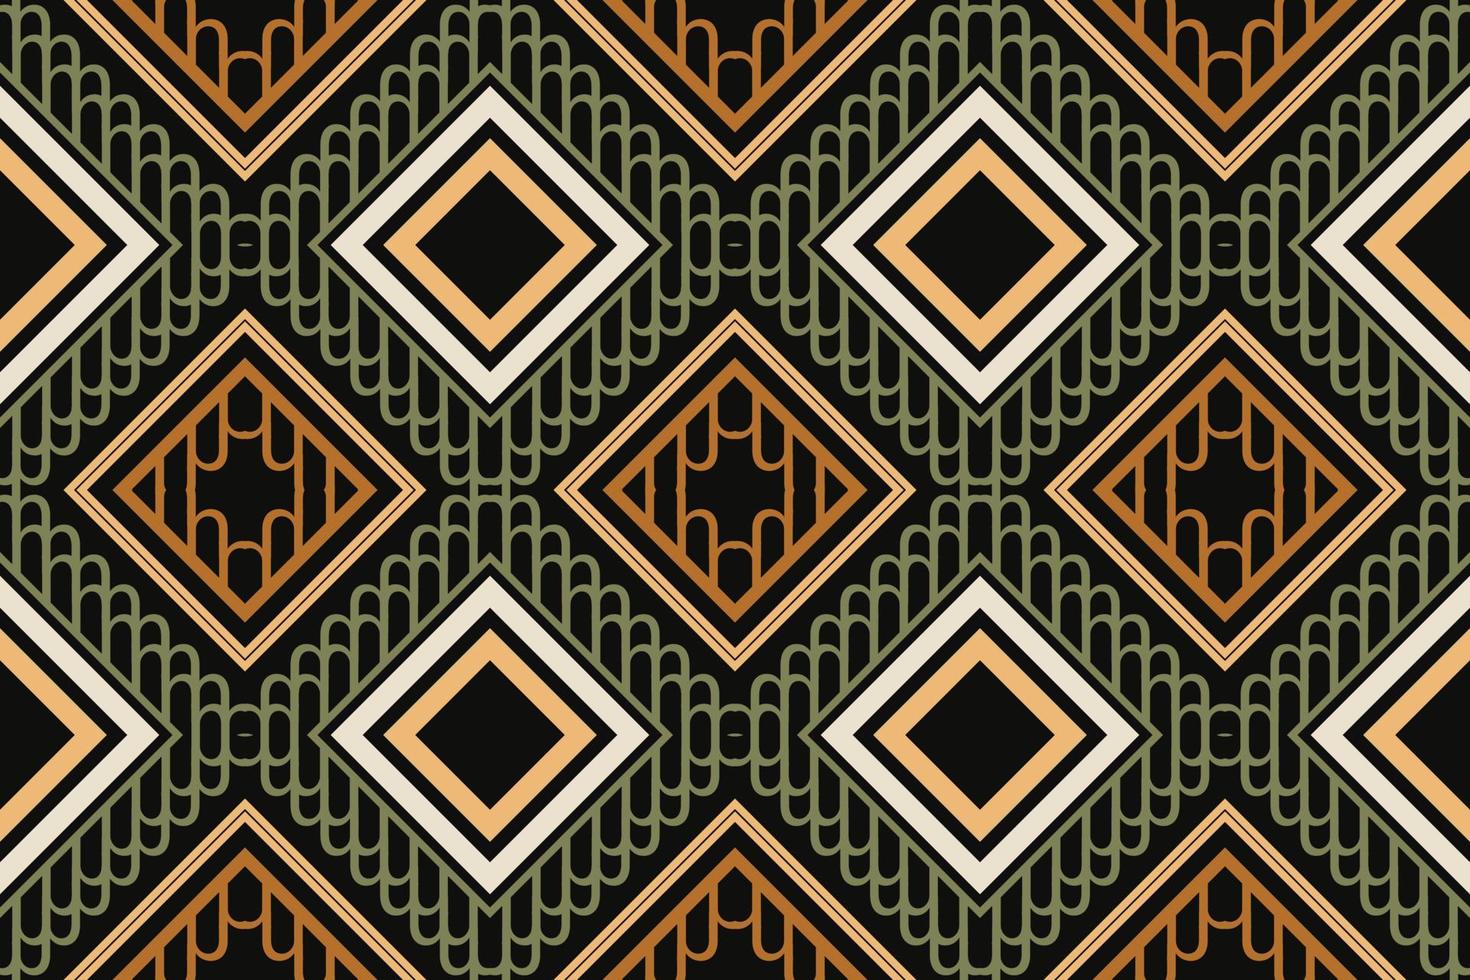 étnico azteca ikat patrón sin costuras textil africano ikat patrón sin costuras diseño de vector digital para imprimir saree kurti borneo tela azteca cepillo símbolos muestras elegante